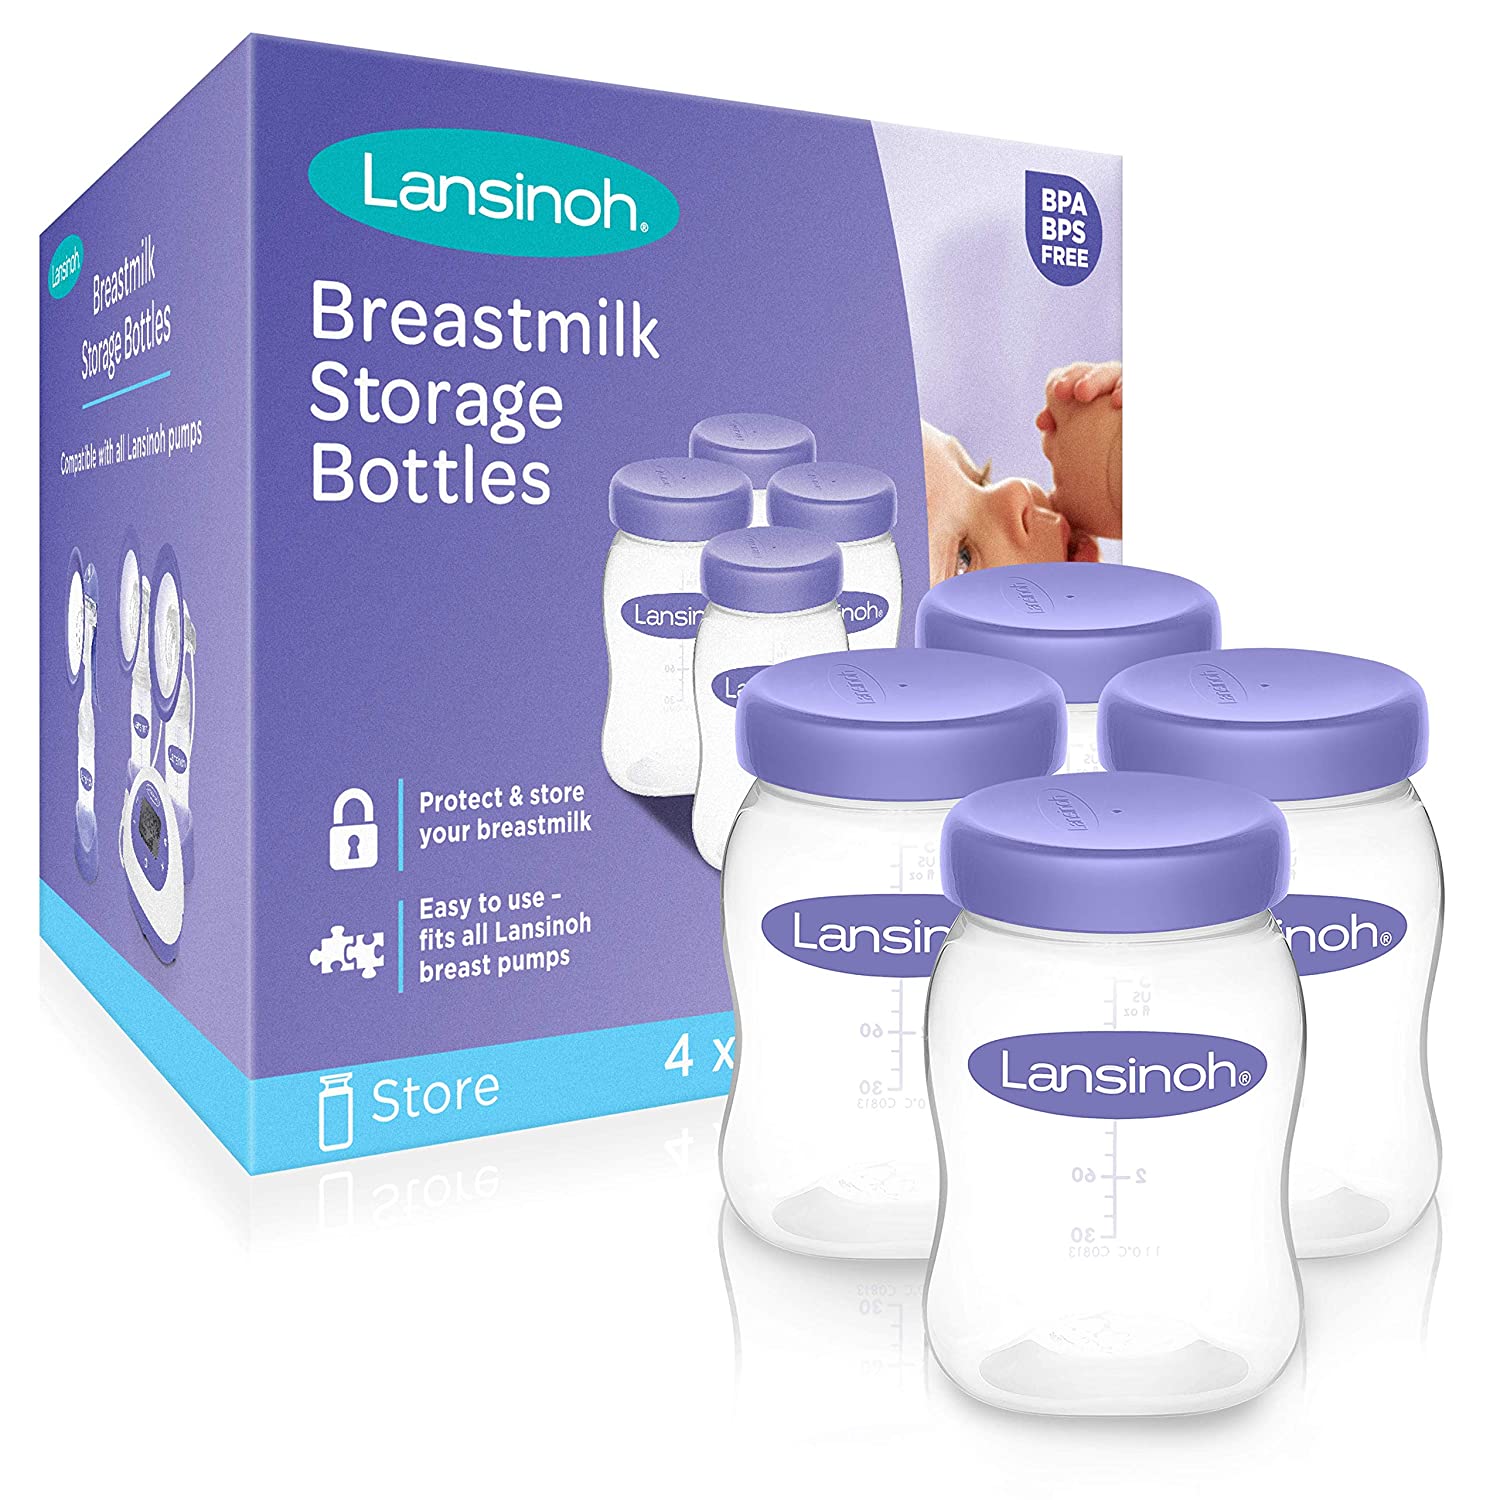 Lansinoh breast milk storage bottles - 4 bottles